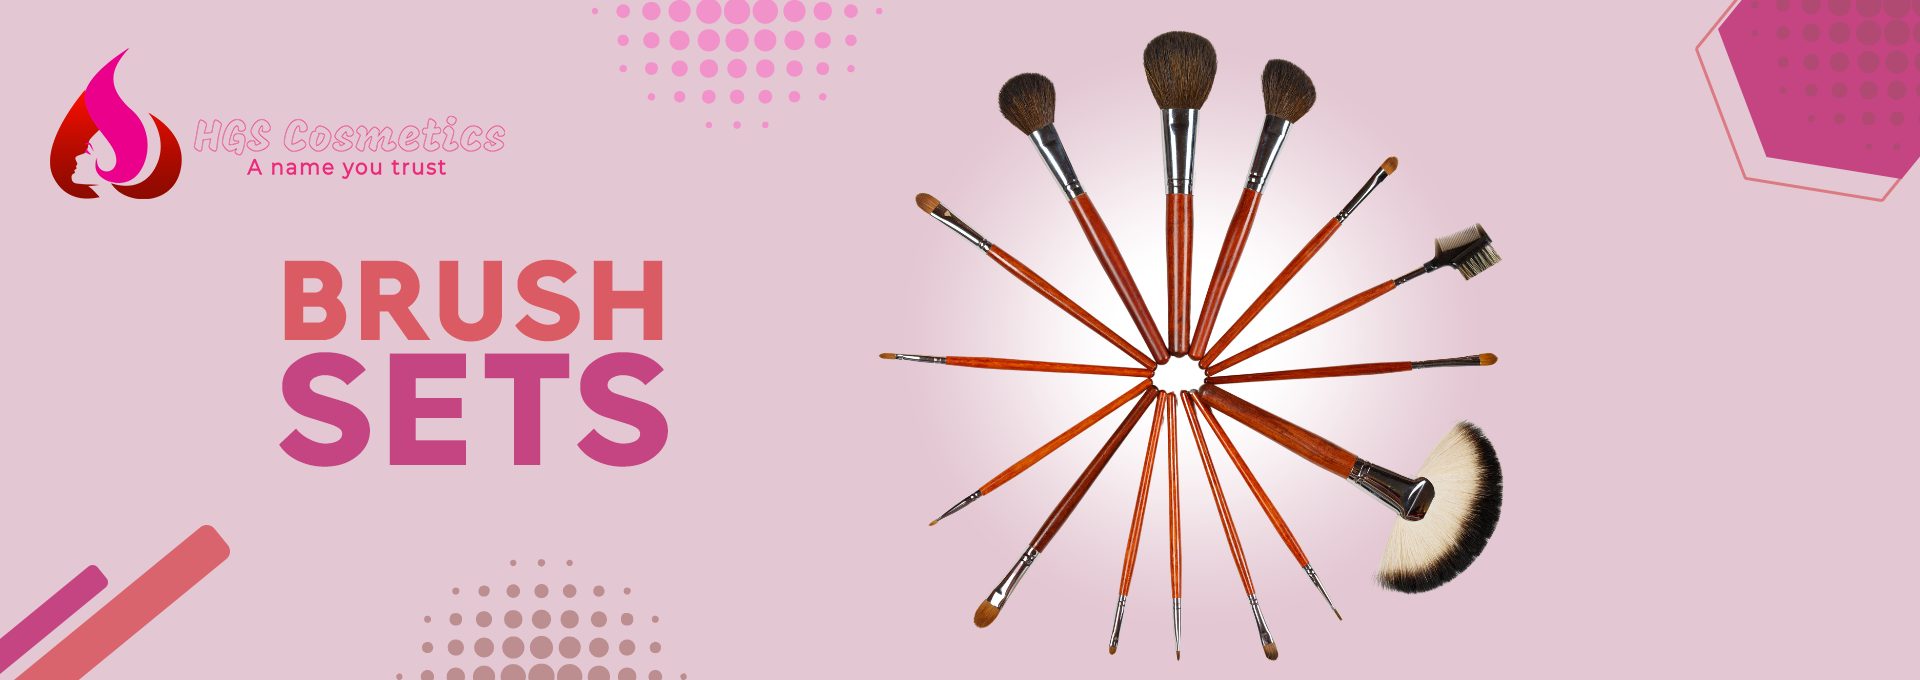 Shop Best Makeup Brush Sets products Online @ HGS Cosmetics